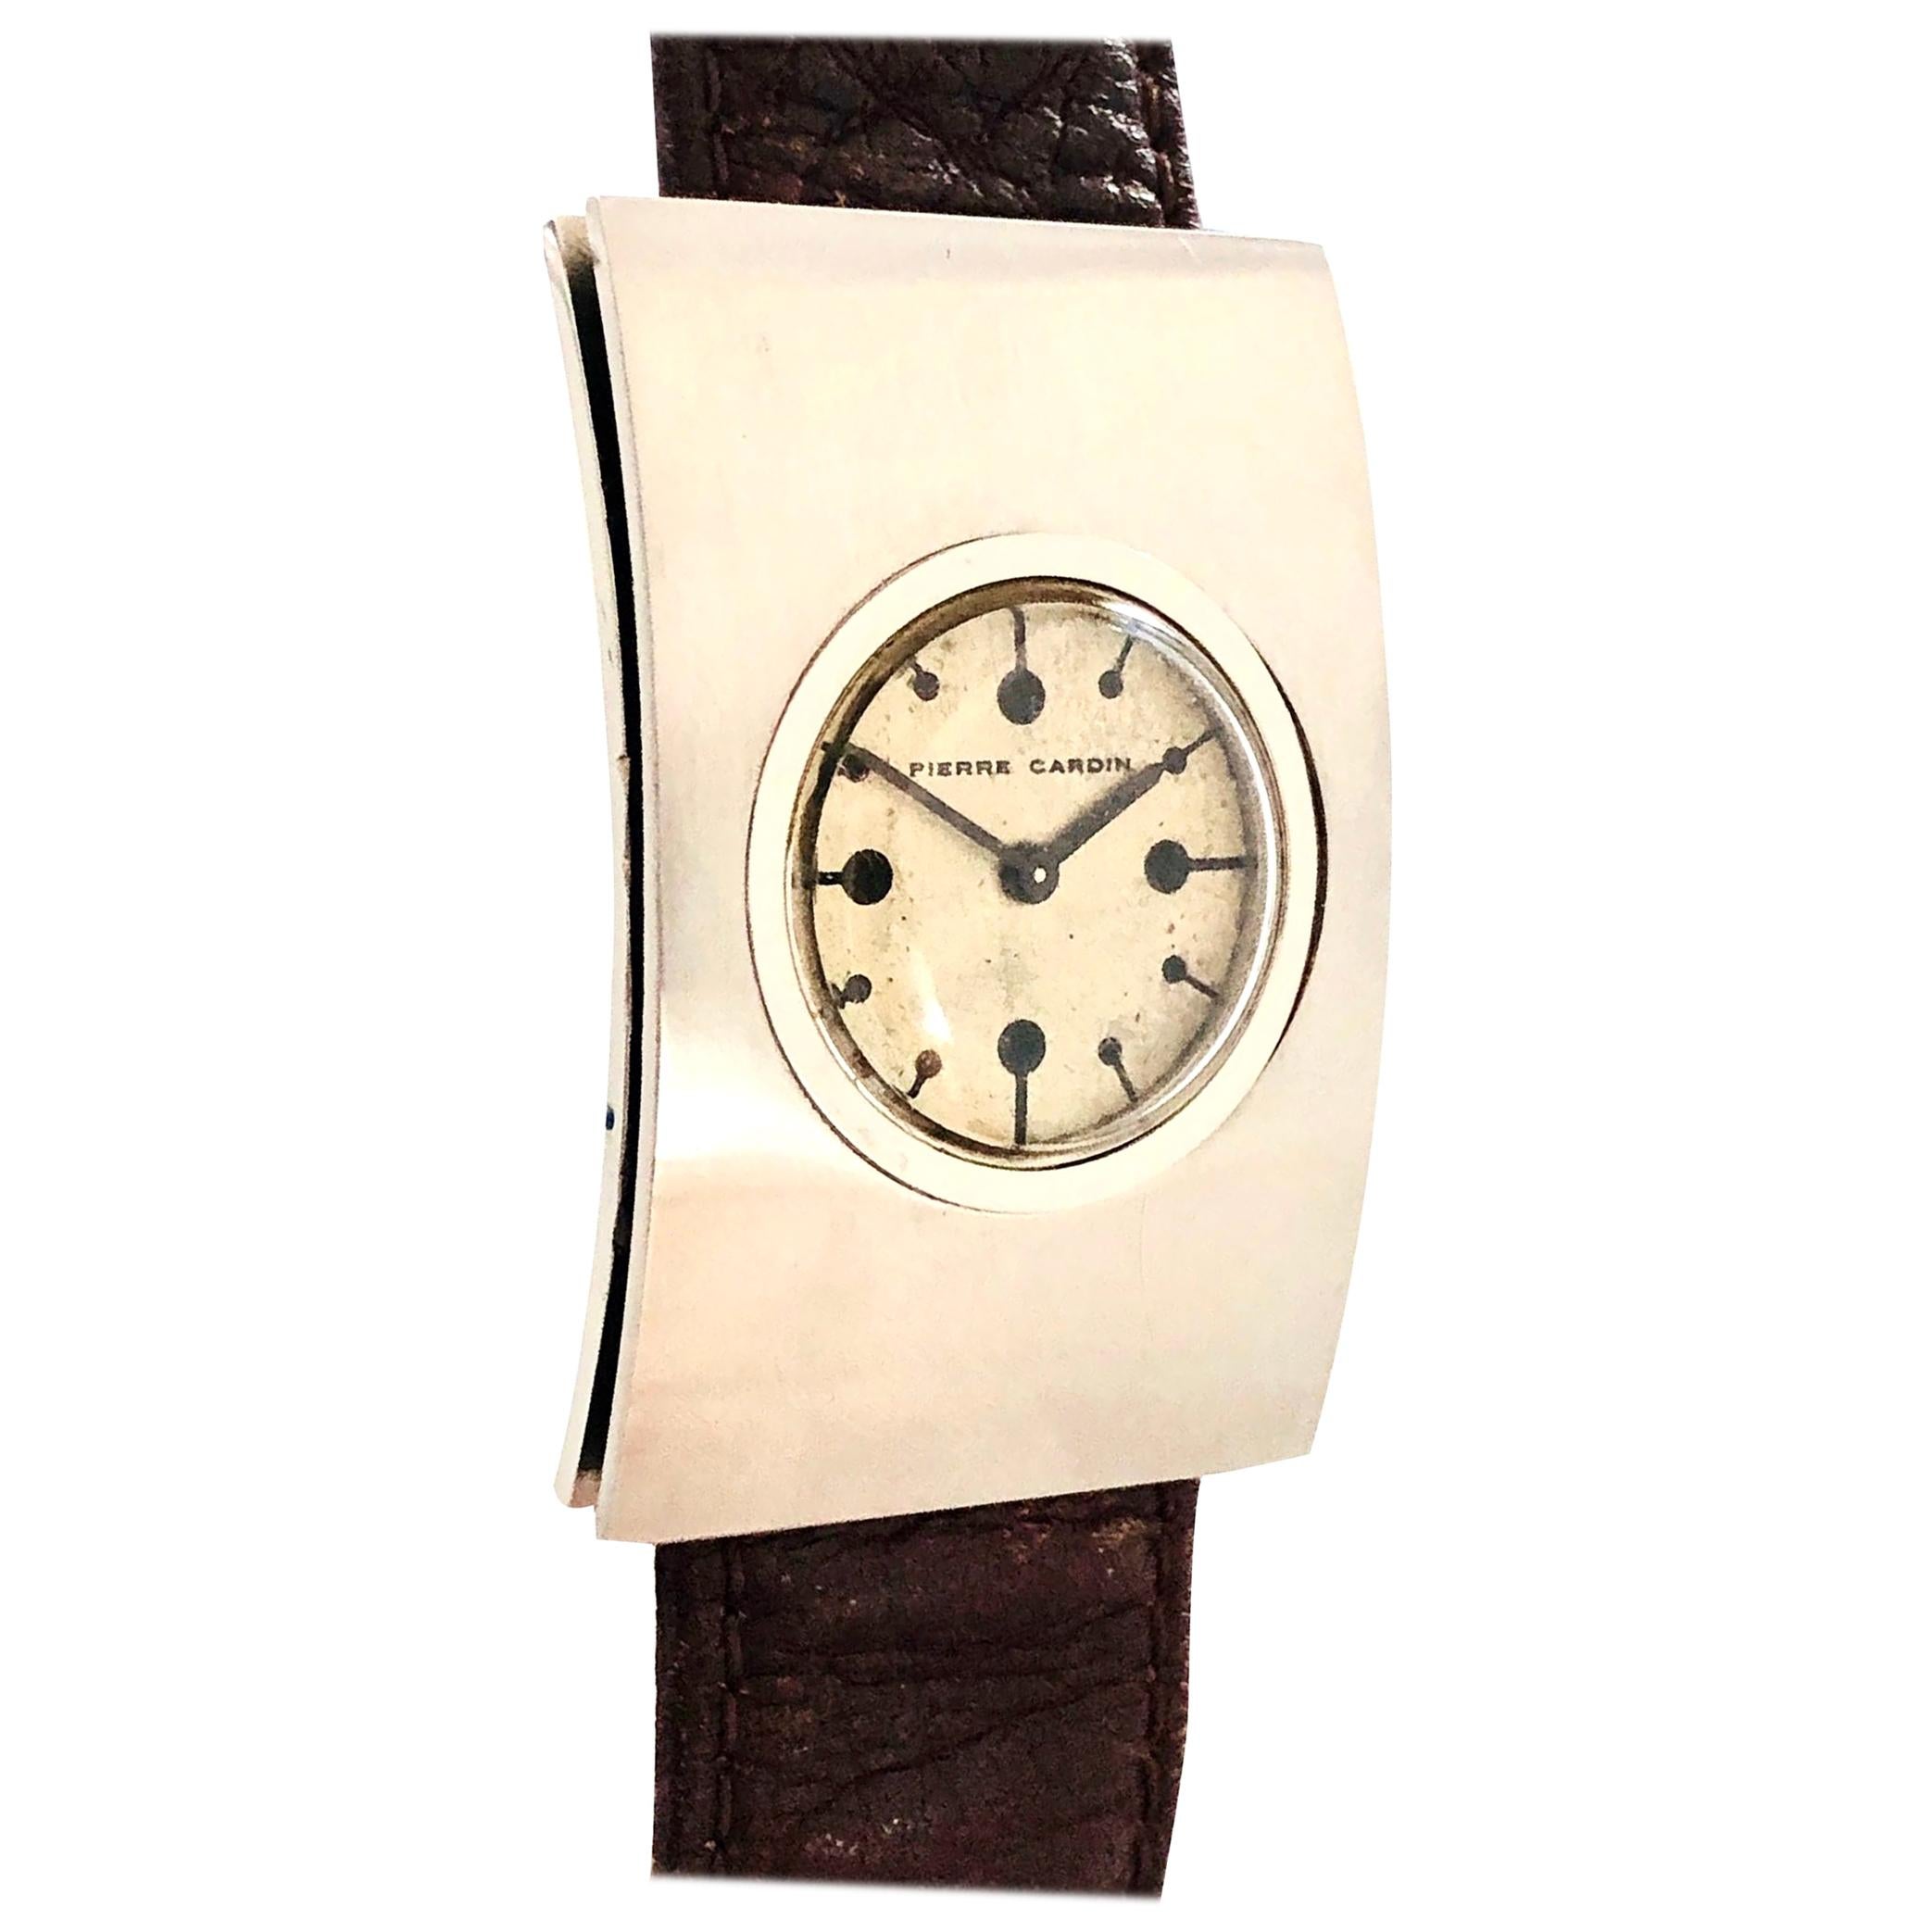 Jaeger LeCoultre for Pierre Cardin 1970s Large Steel Mechanical Wristwatch